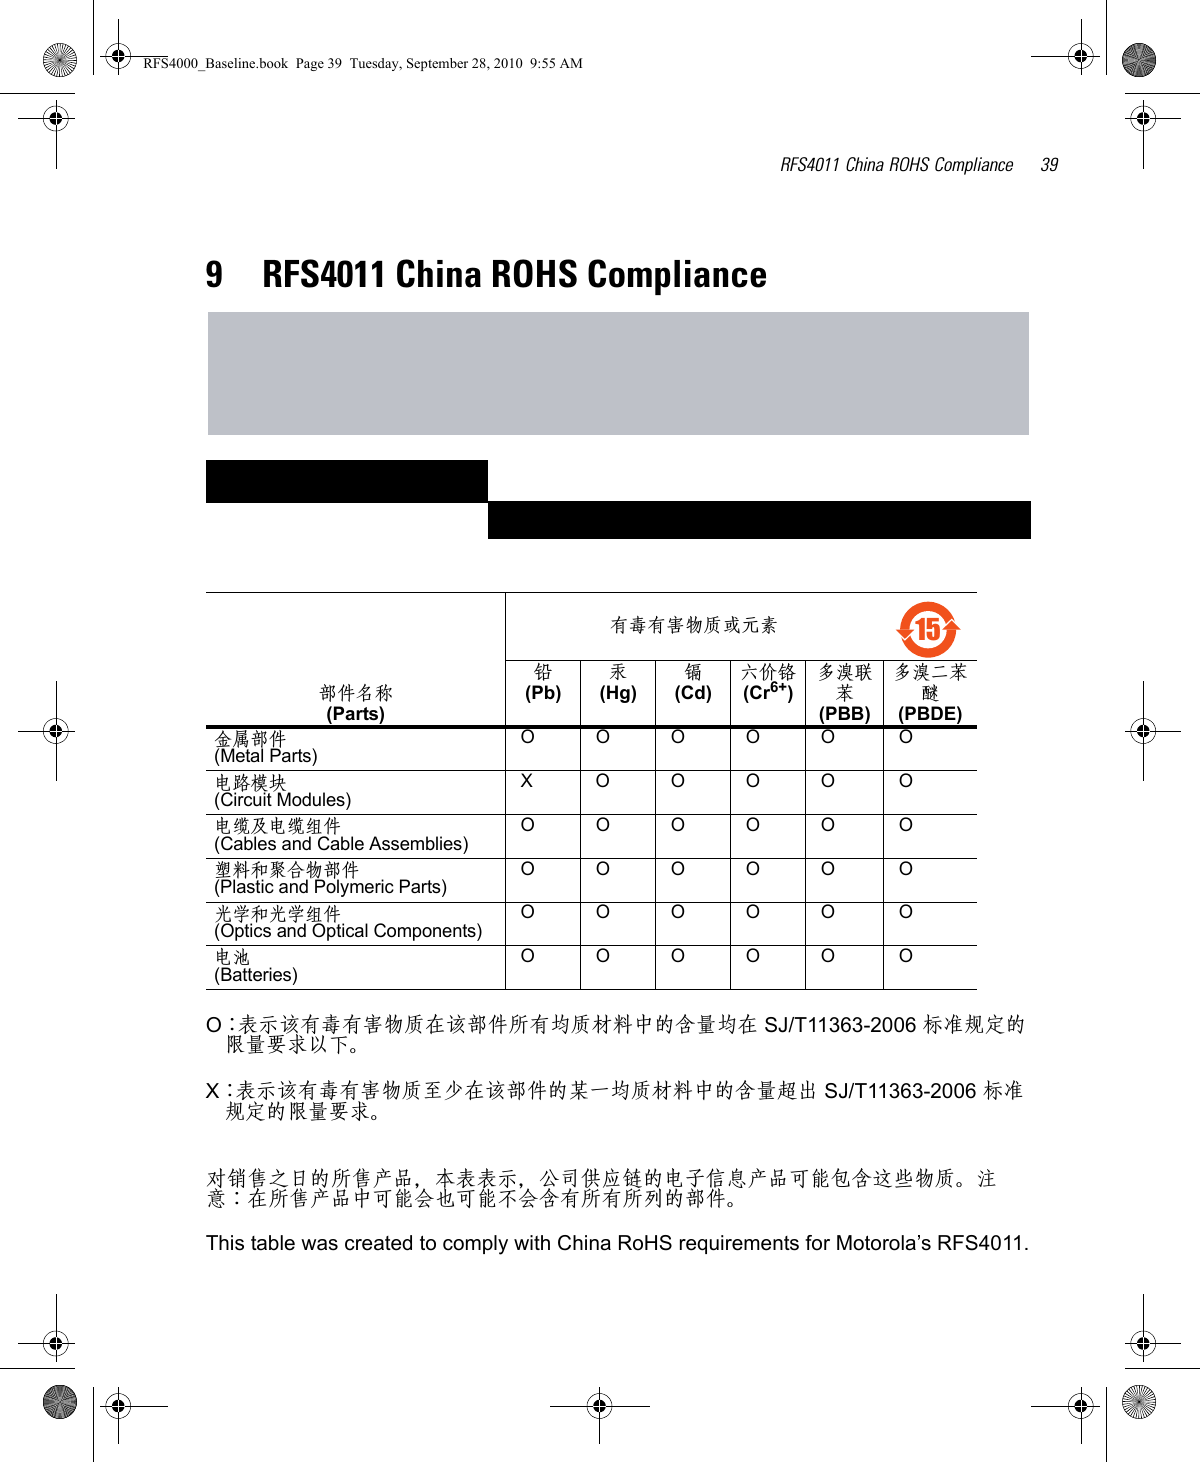 RFS4011 China ROHS Compliance 399 RFS4011 China ROHS Compliance  O：表示该有毒有害物质在该部件所有均质材料中的含量均在 SJ/T11363-2006 标准规定的限量要求以下。X：表示该有毒有害物质至少在该部件的某一均质材料中的含量超出 SJ/T11363-2006 标准规定的限量要求。对销售之日的所售产品，本表表示，公司供应链的电子信息产品可能包含这些物质。注意：在所售产品中可能会也可能不会含有所有所列的部件。This table was created to comply with China RoHS requirements for Motorola’s RFS4011.部件名称 (Parts) 有毒有害物质或元素 铅 (Pb)汞 (Hg)镉 (Cd)六价铬 (Cr6+)多溴联苯 (PBB)多溴二苯醚 (PBDE)金属部件 (Metal Parts)OOOOO O电路模块 (Circuit Modules)XOOOO O电缆及电缆组件 (Cables and Cable Assemblies)OOOOO O塑料和聚合物部件 (Plastic and Polymeric Parts)OOOOO O光学和光学组件 (Optics and Optical Components)OOOOO O电池 (Batteries)OOOOO O　15RFS4000_Baseline.book  Page 39  Tuesday, September 28, 2010  9:55 AM